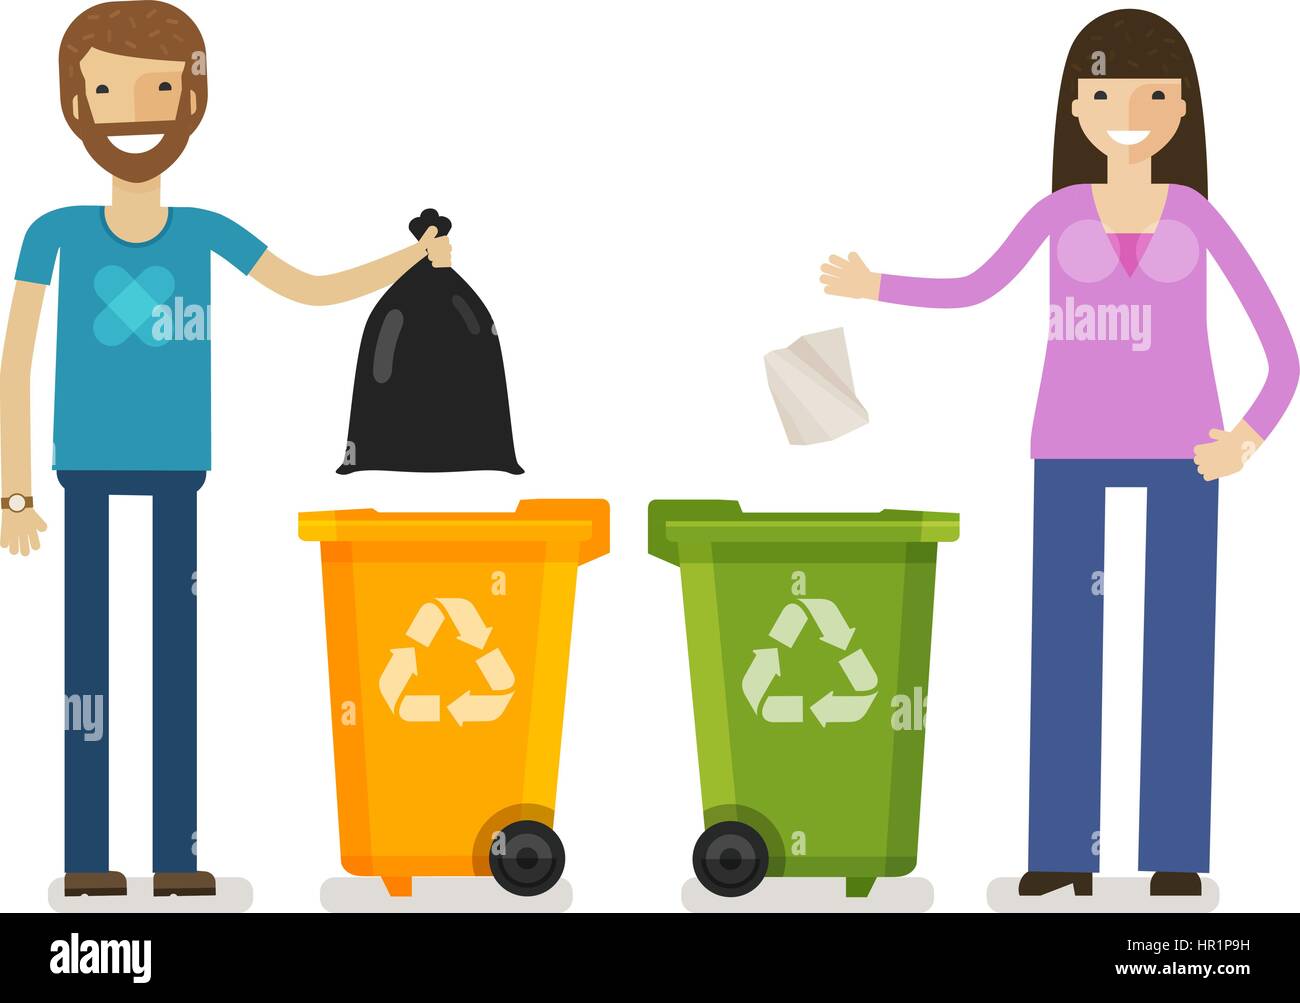 Mülleimer, Umwelt sauber halten Stock Illustration